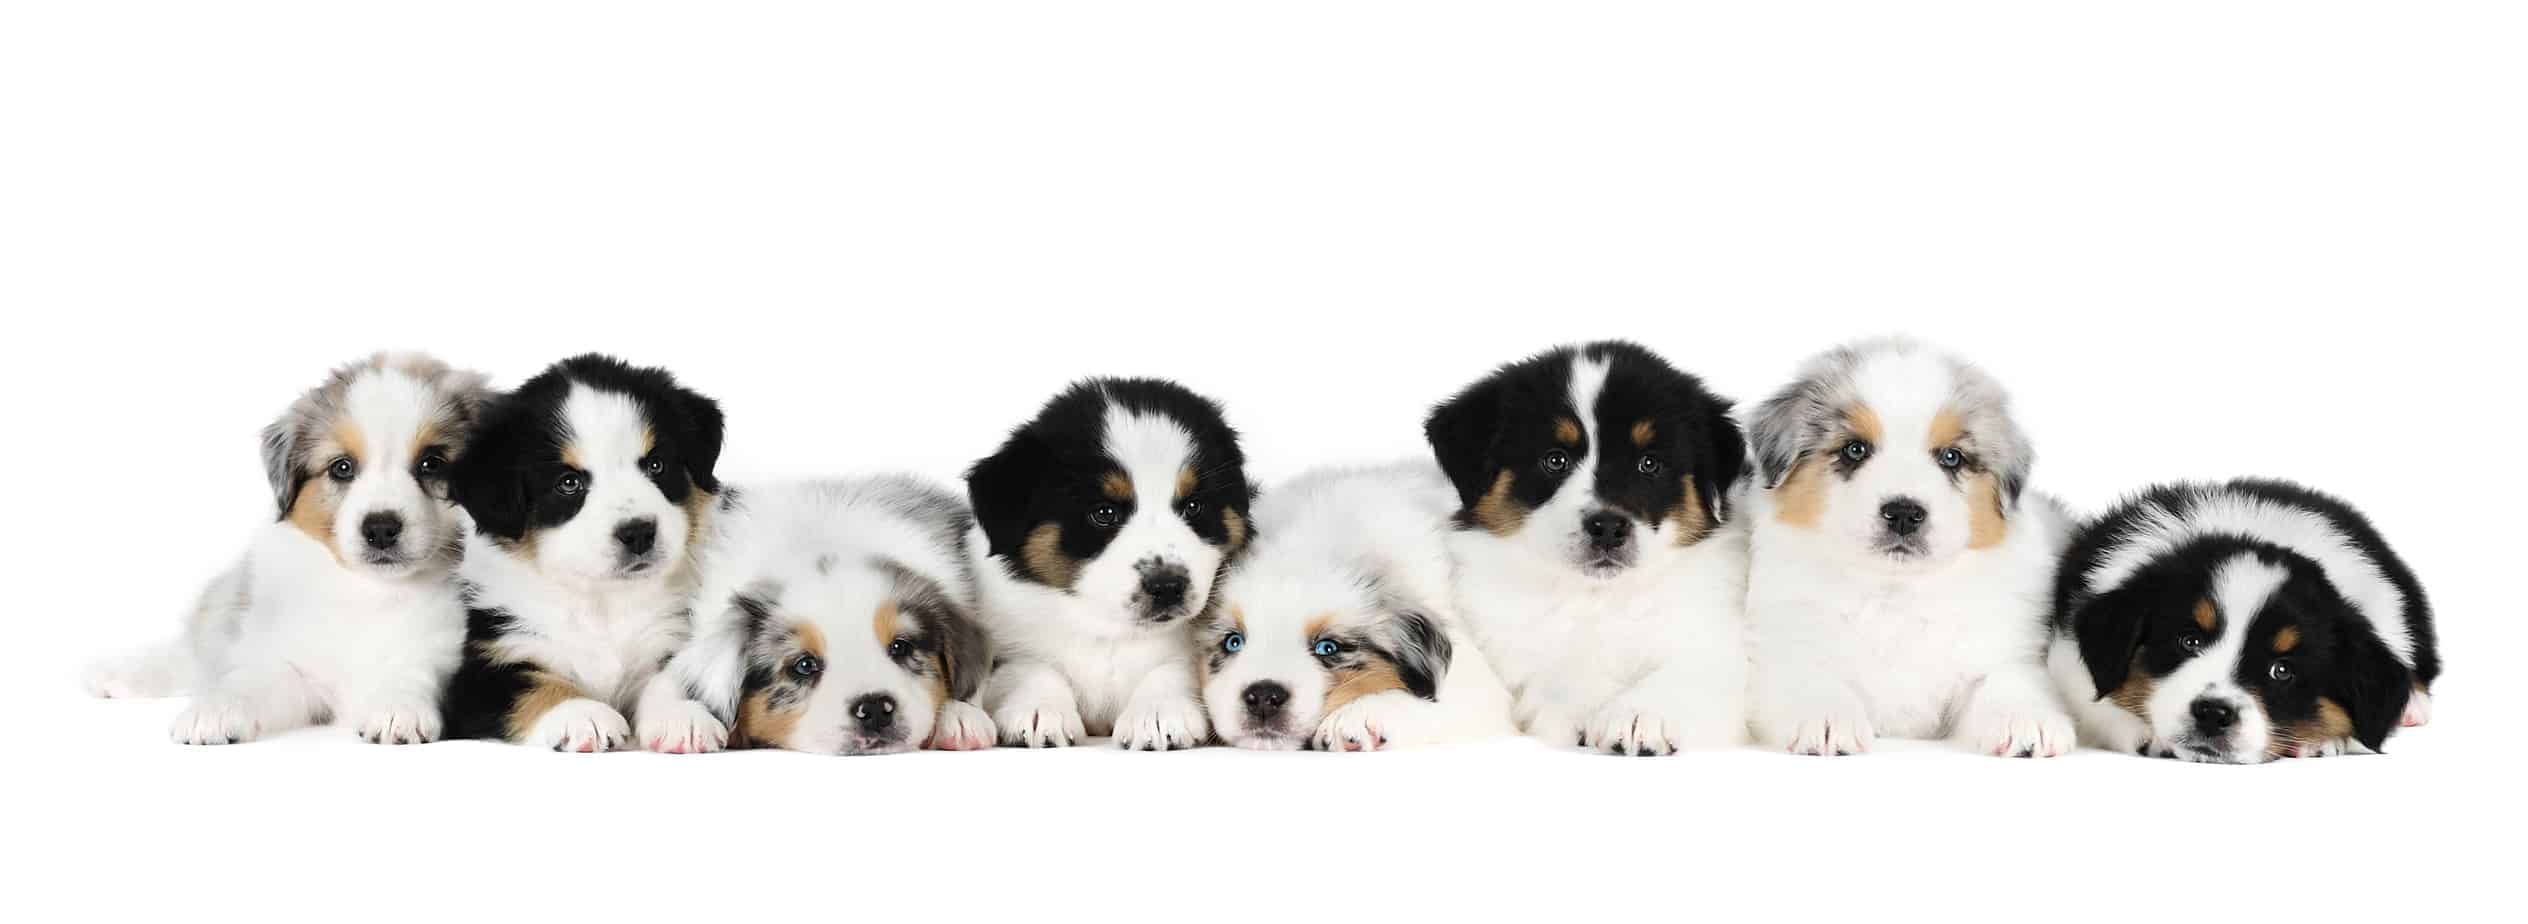 Dog cloning: Consider pros, cons before deciding to copy your dog